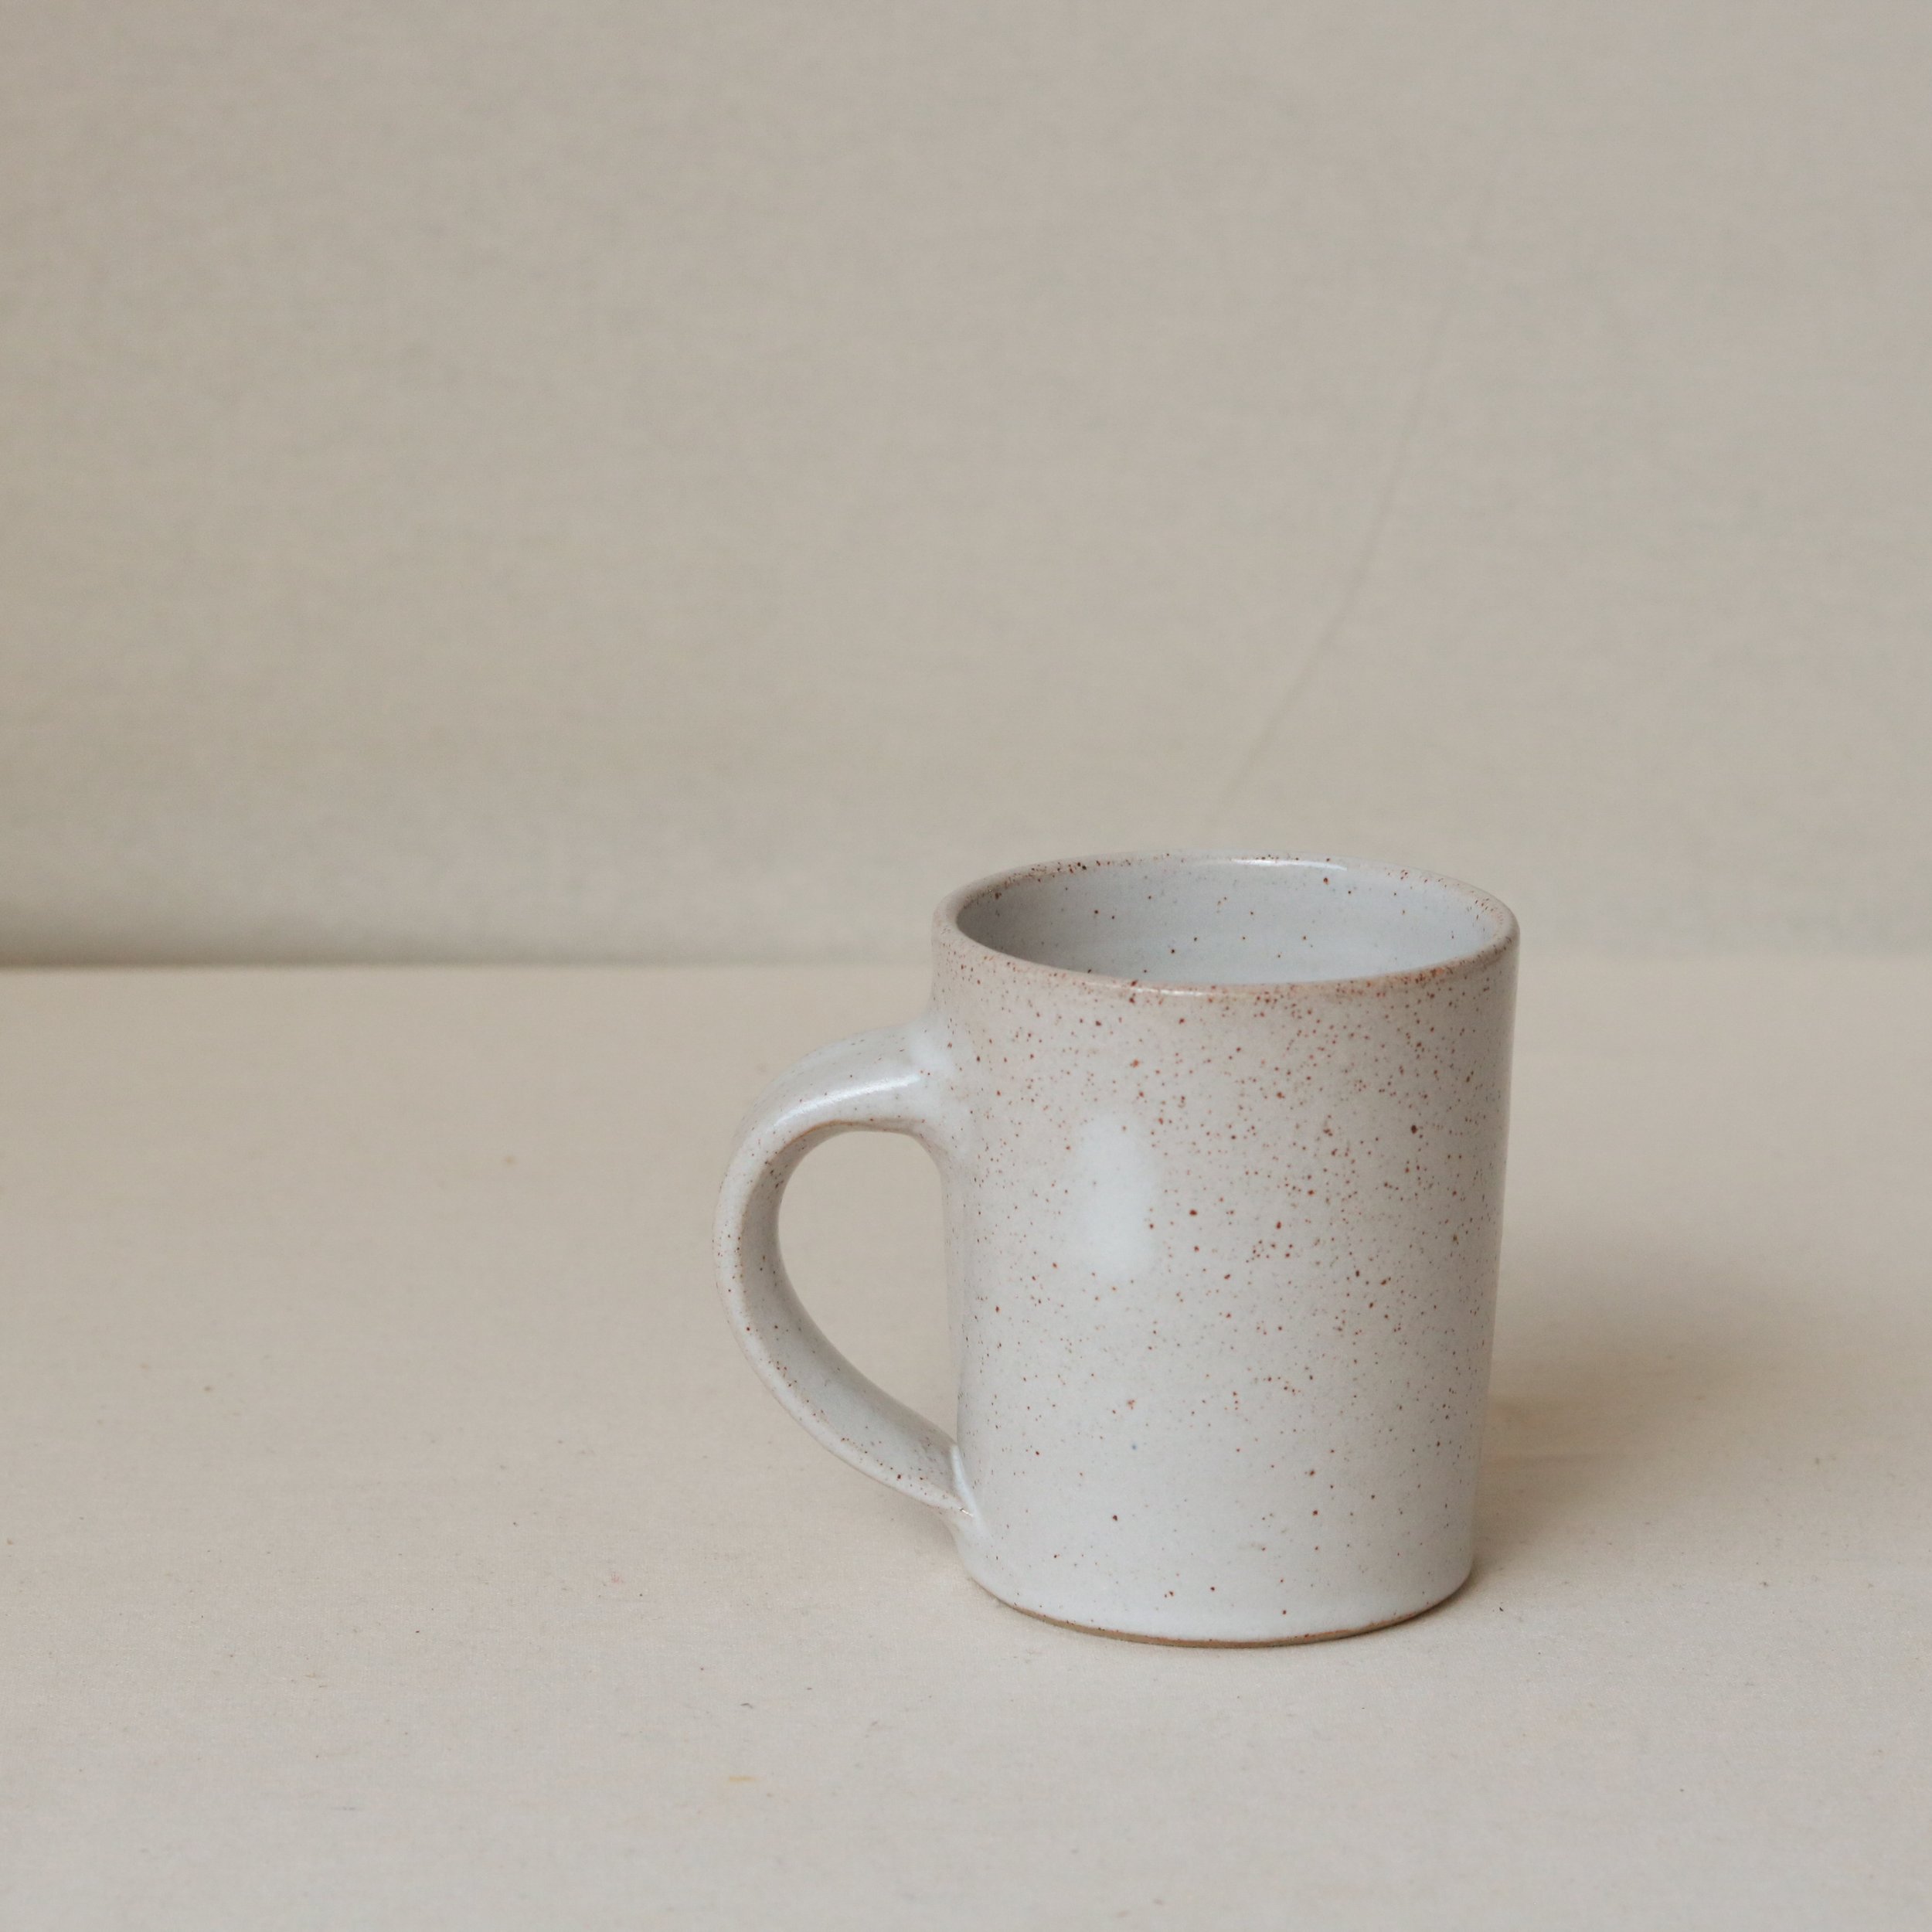 250ml Tapered Mug in Speckled White, Flecked Stoneware-1.jpg